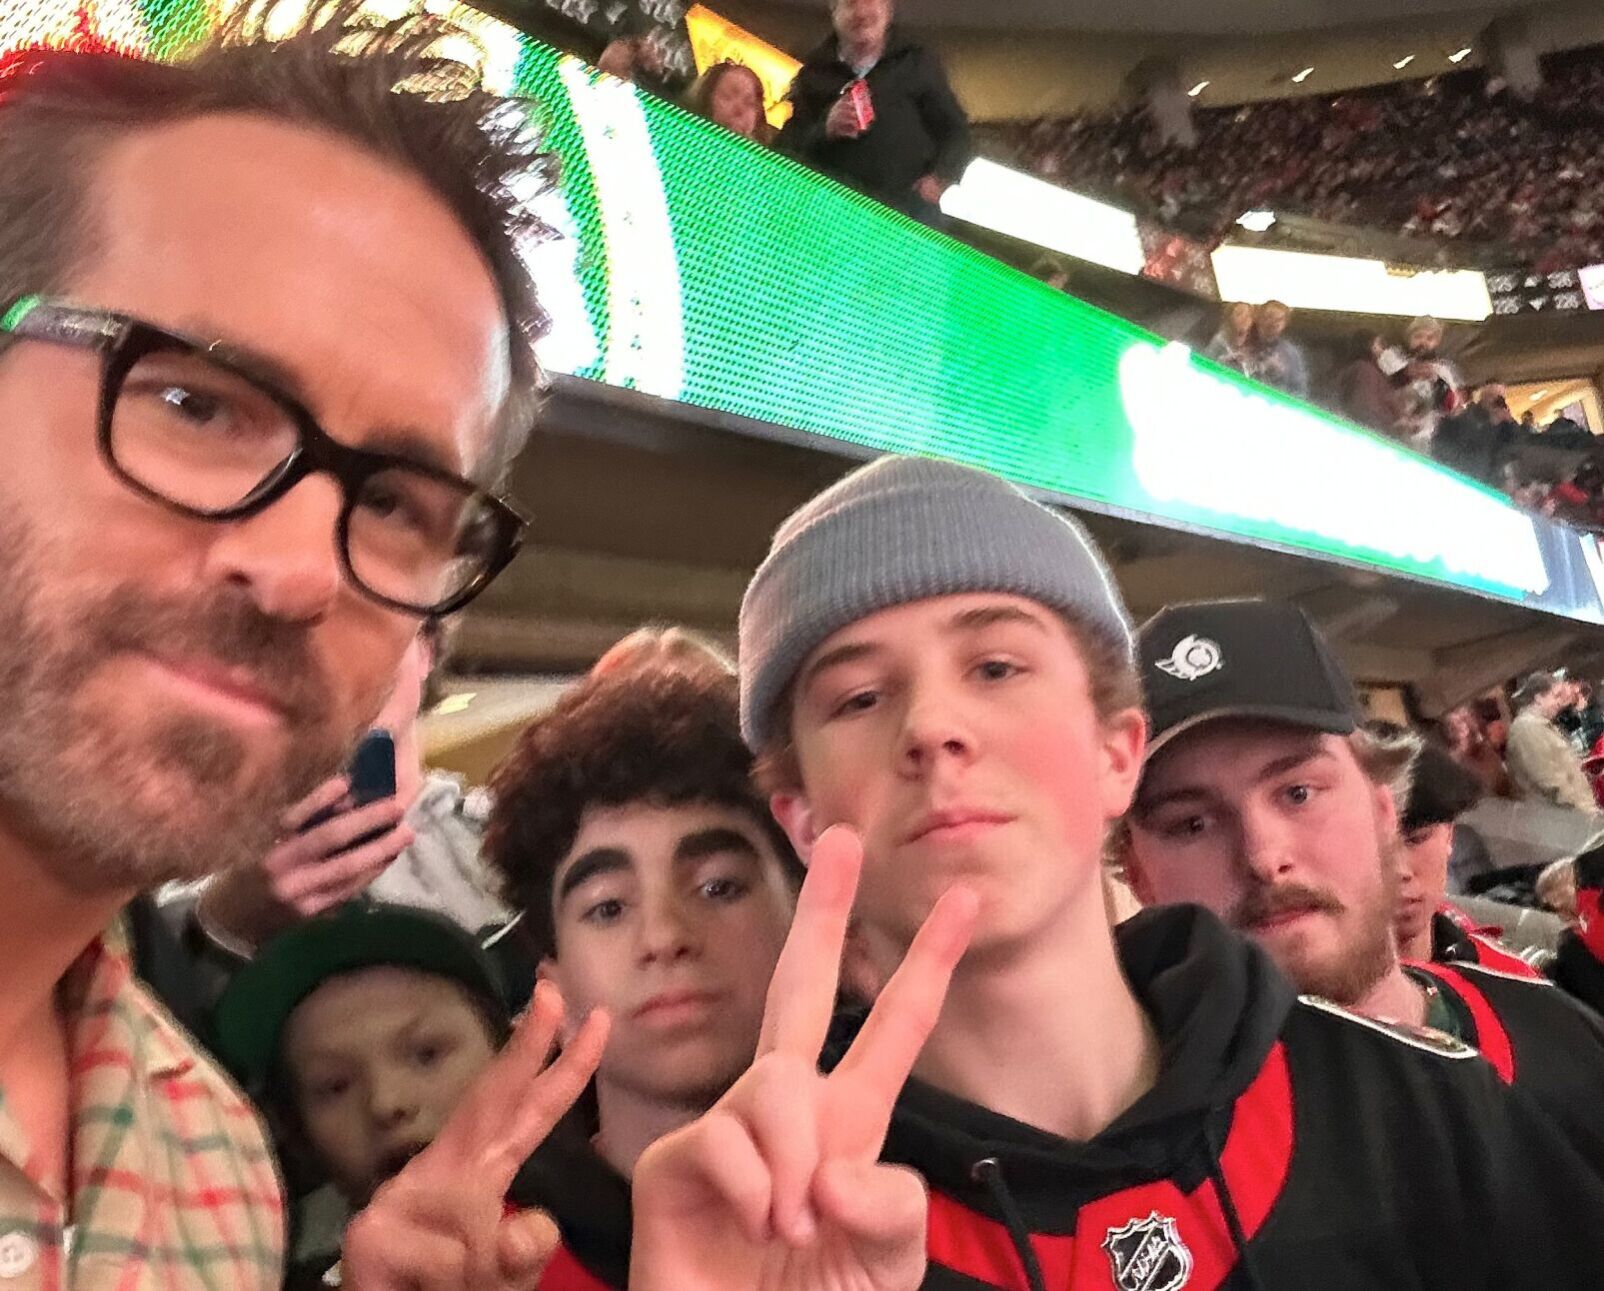 Renfrew hockey fan rubs shoulders with Ryan Reynolds at NHL game